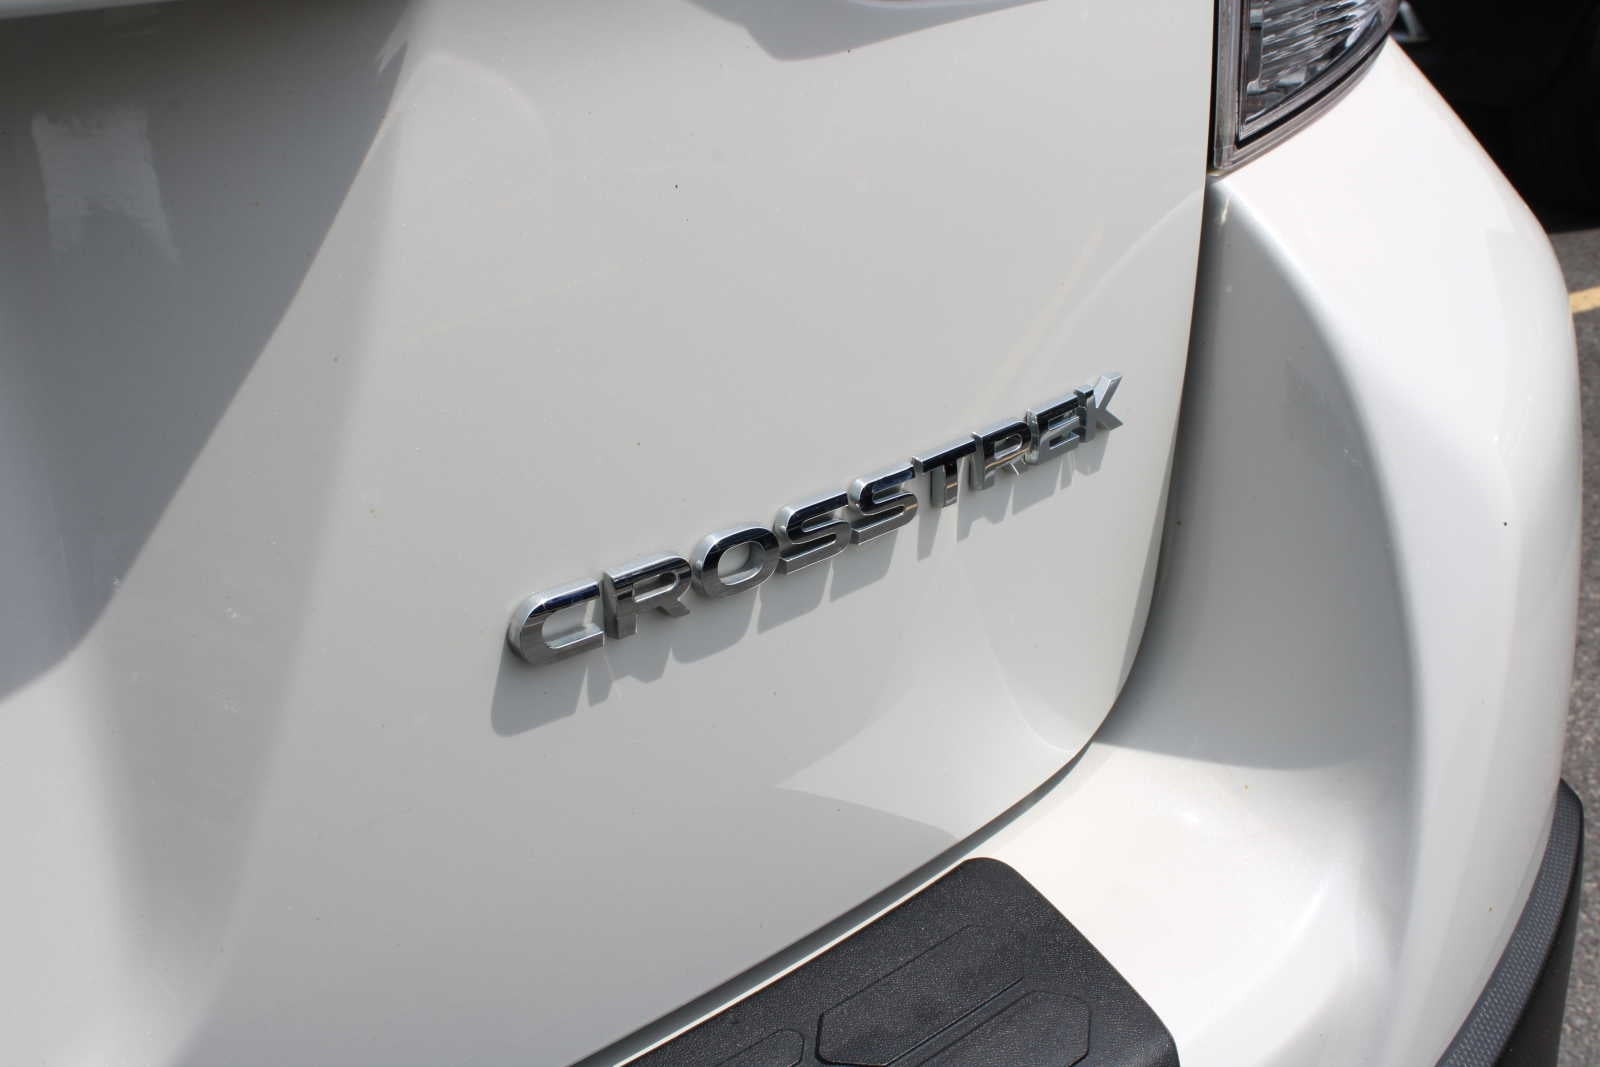 2021 Subaru Crosstrek Premium CVT